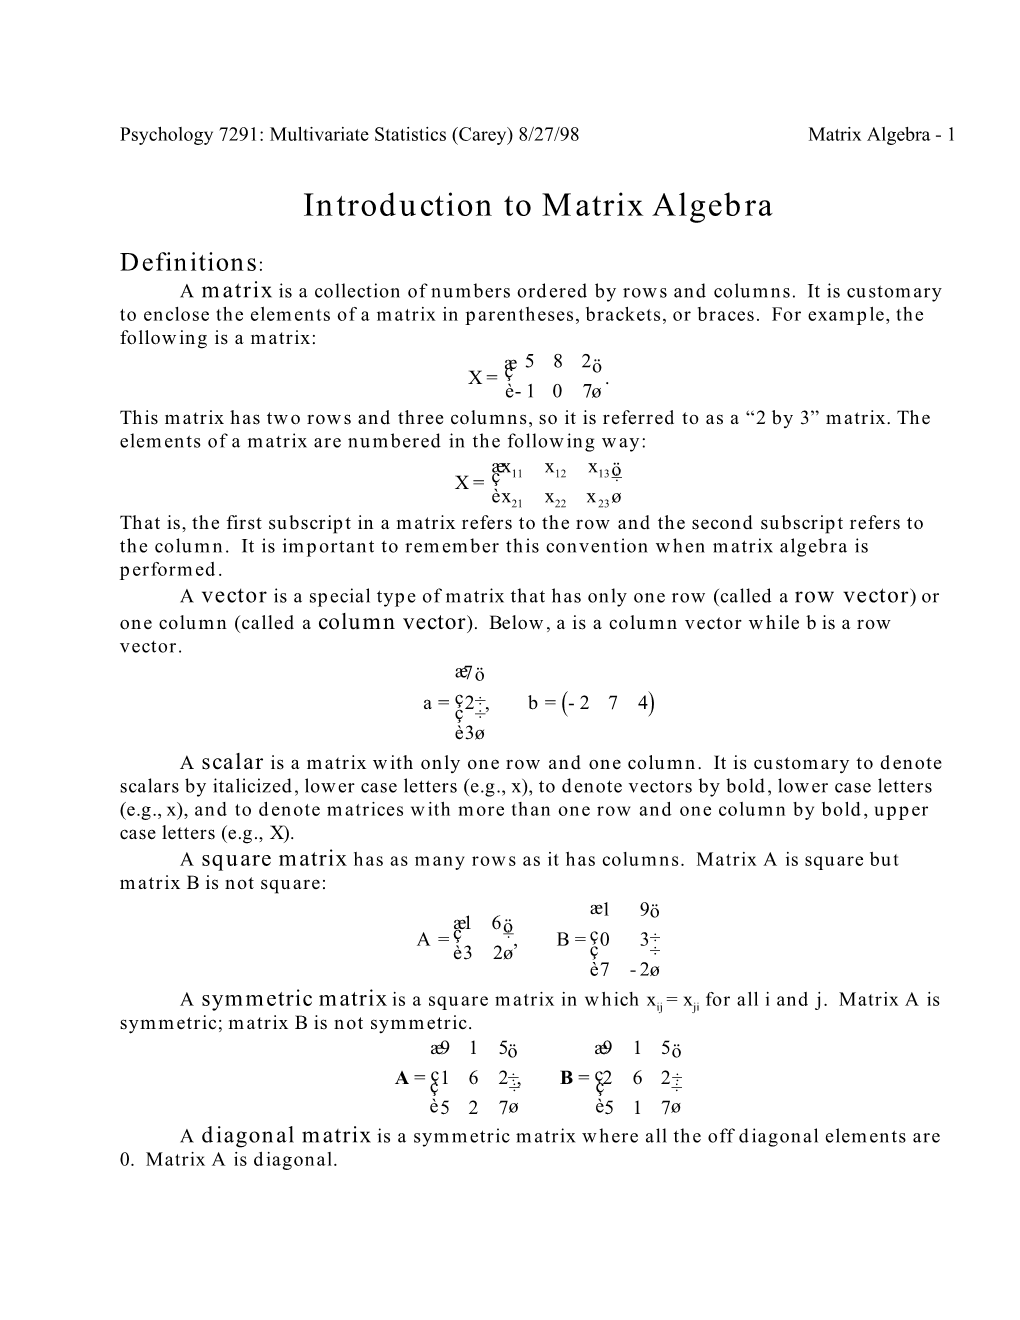 Introduction to Matrix Algebra